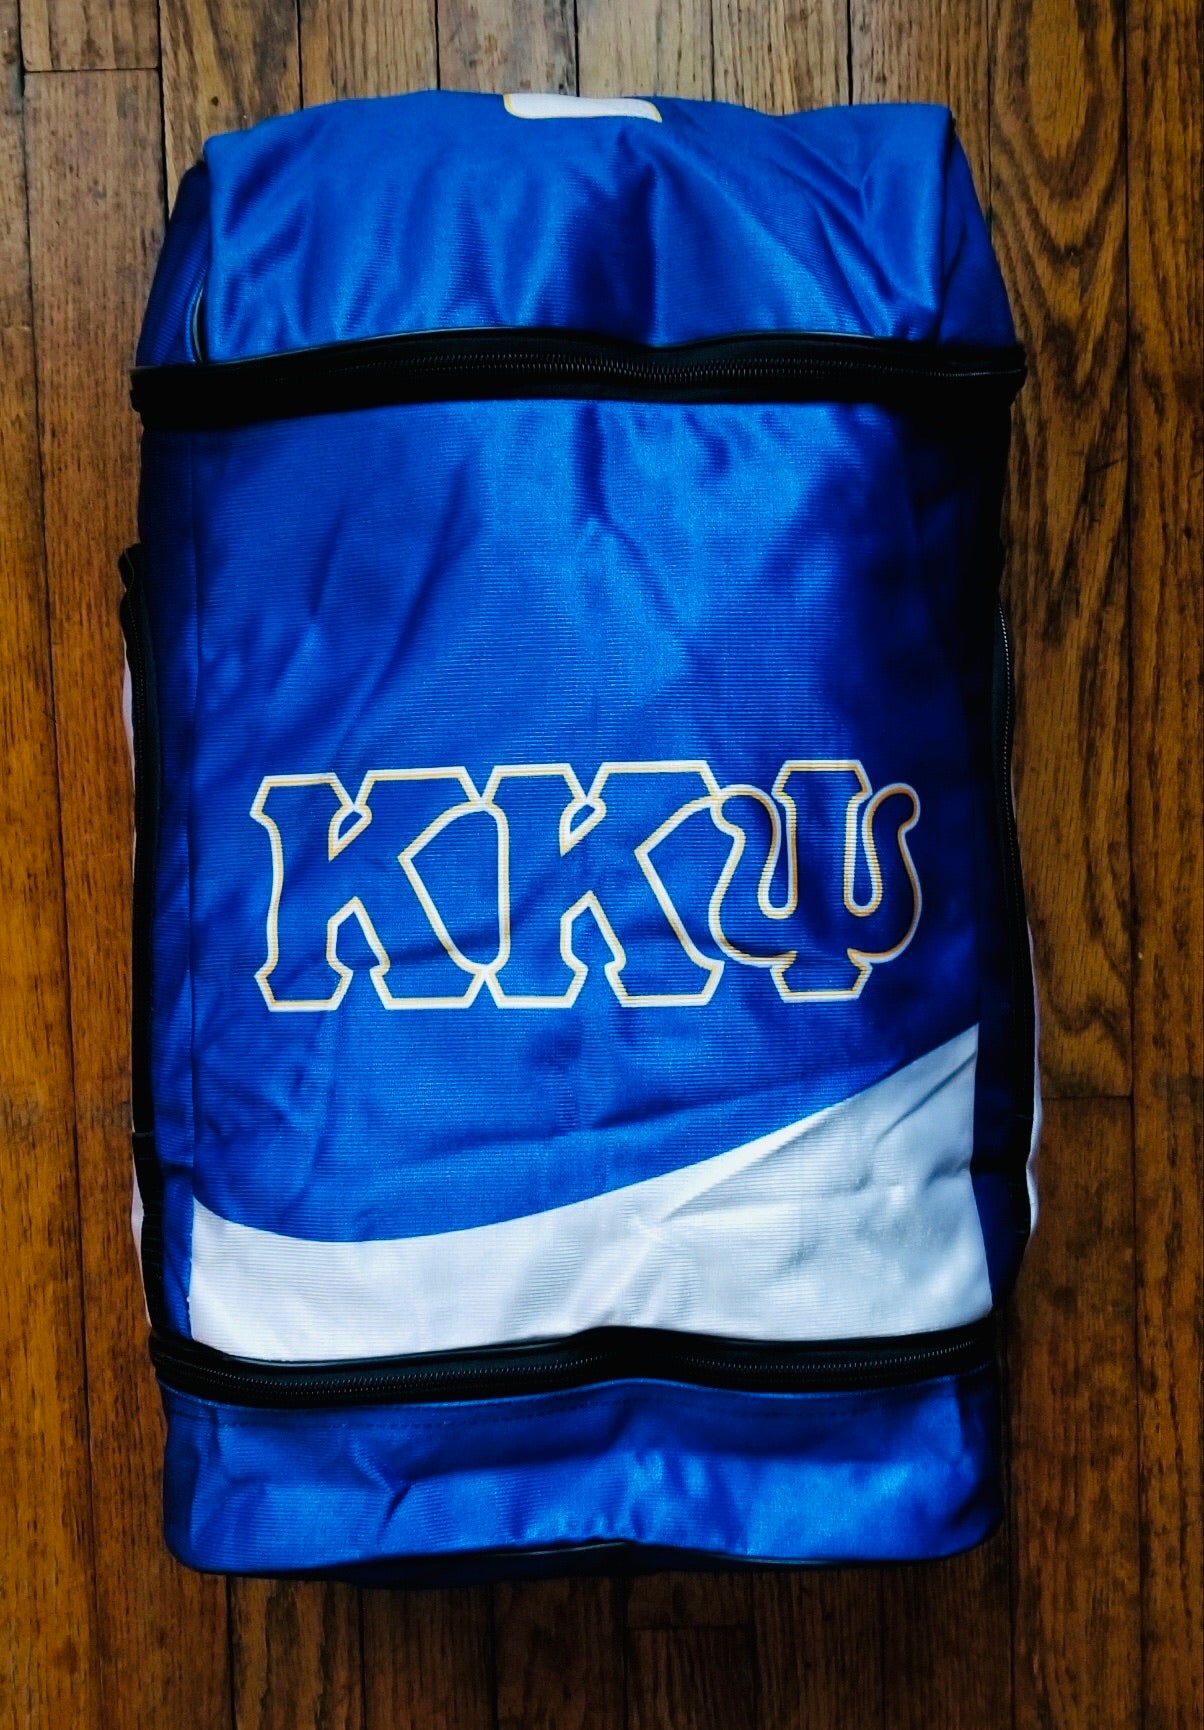 Kappa Kappa Psi Backpack